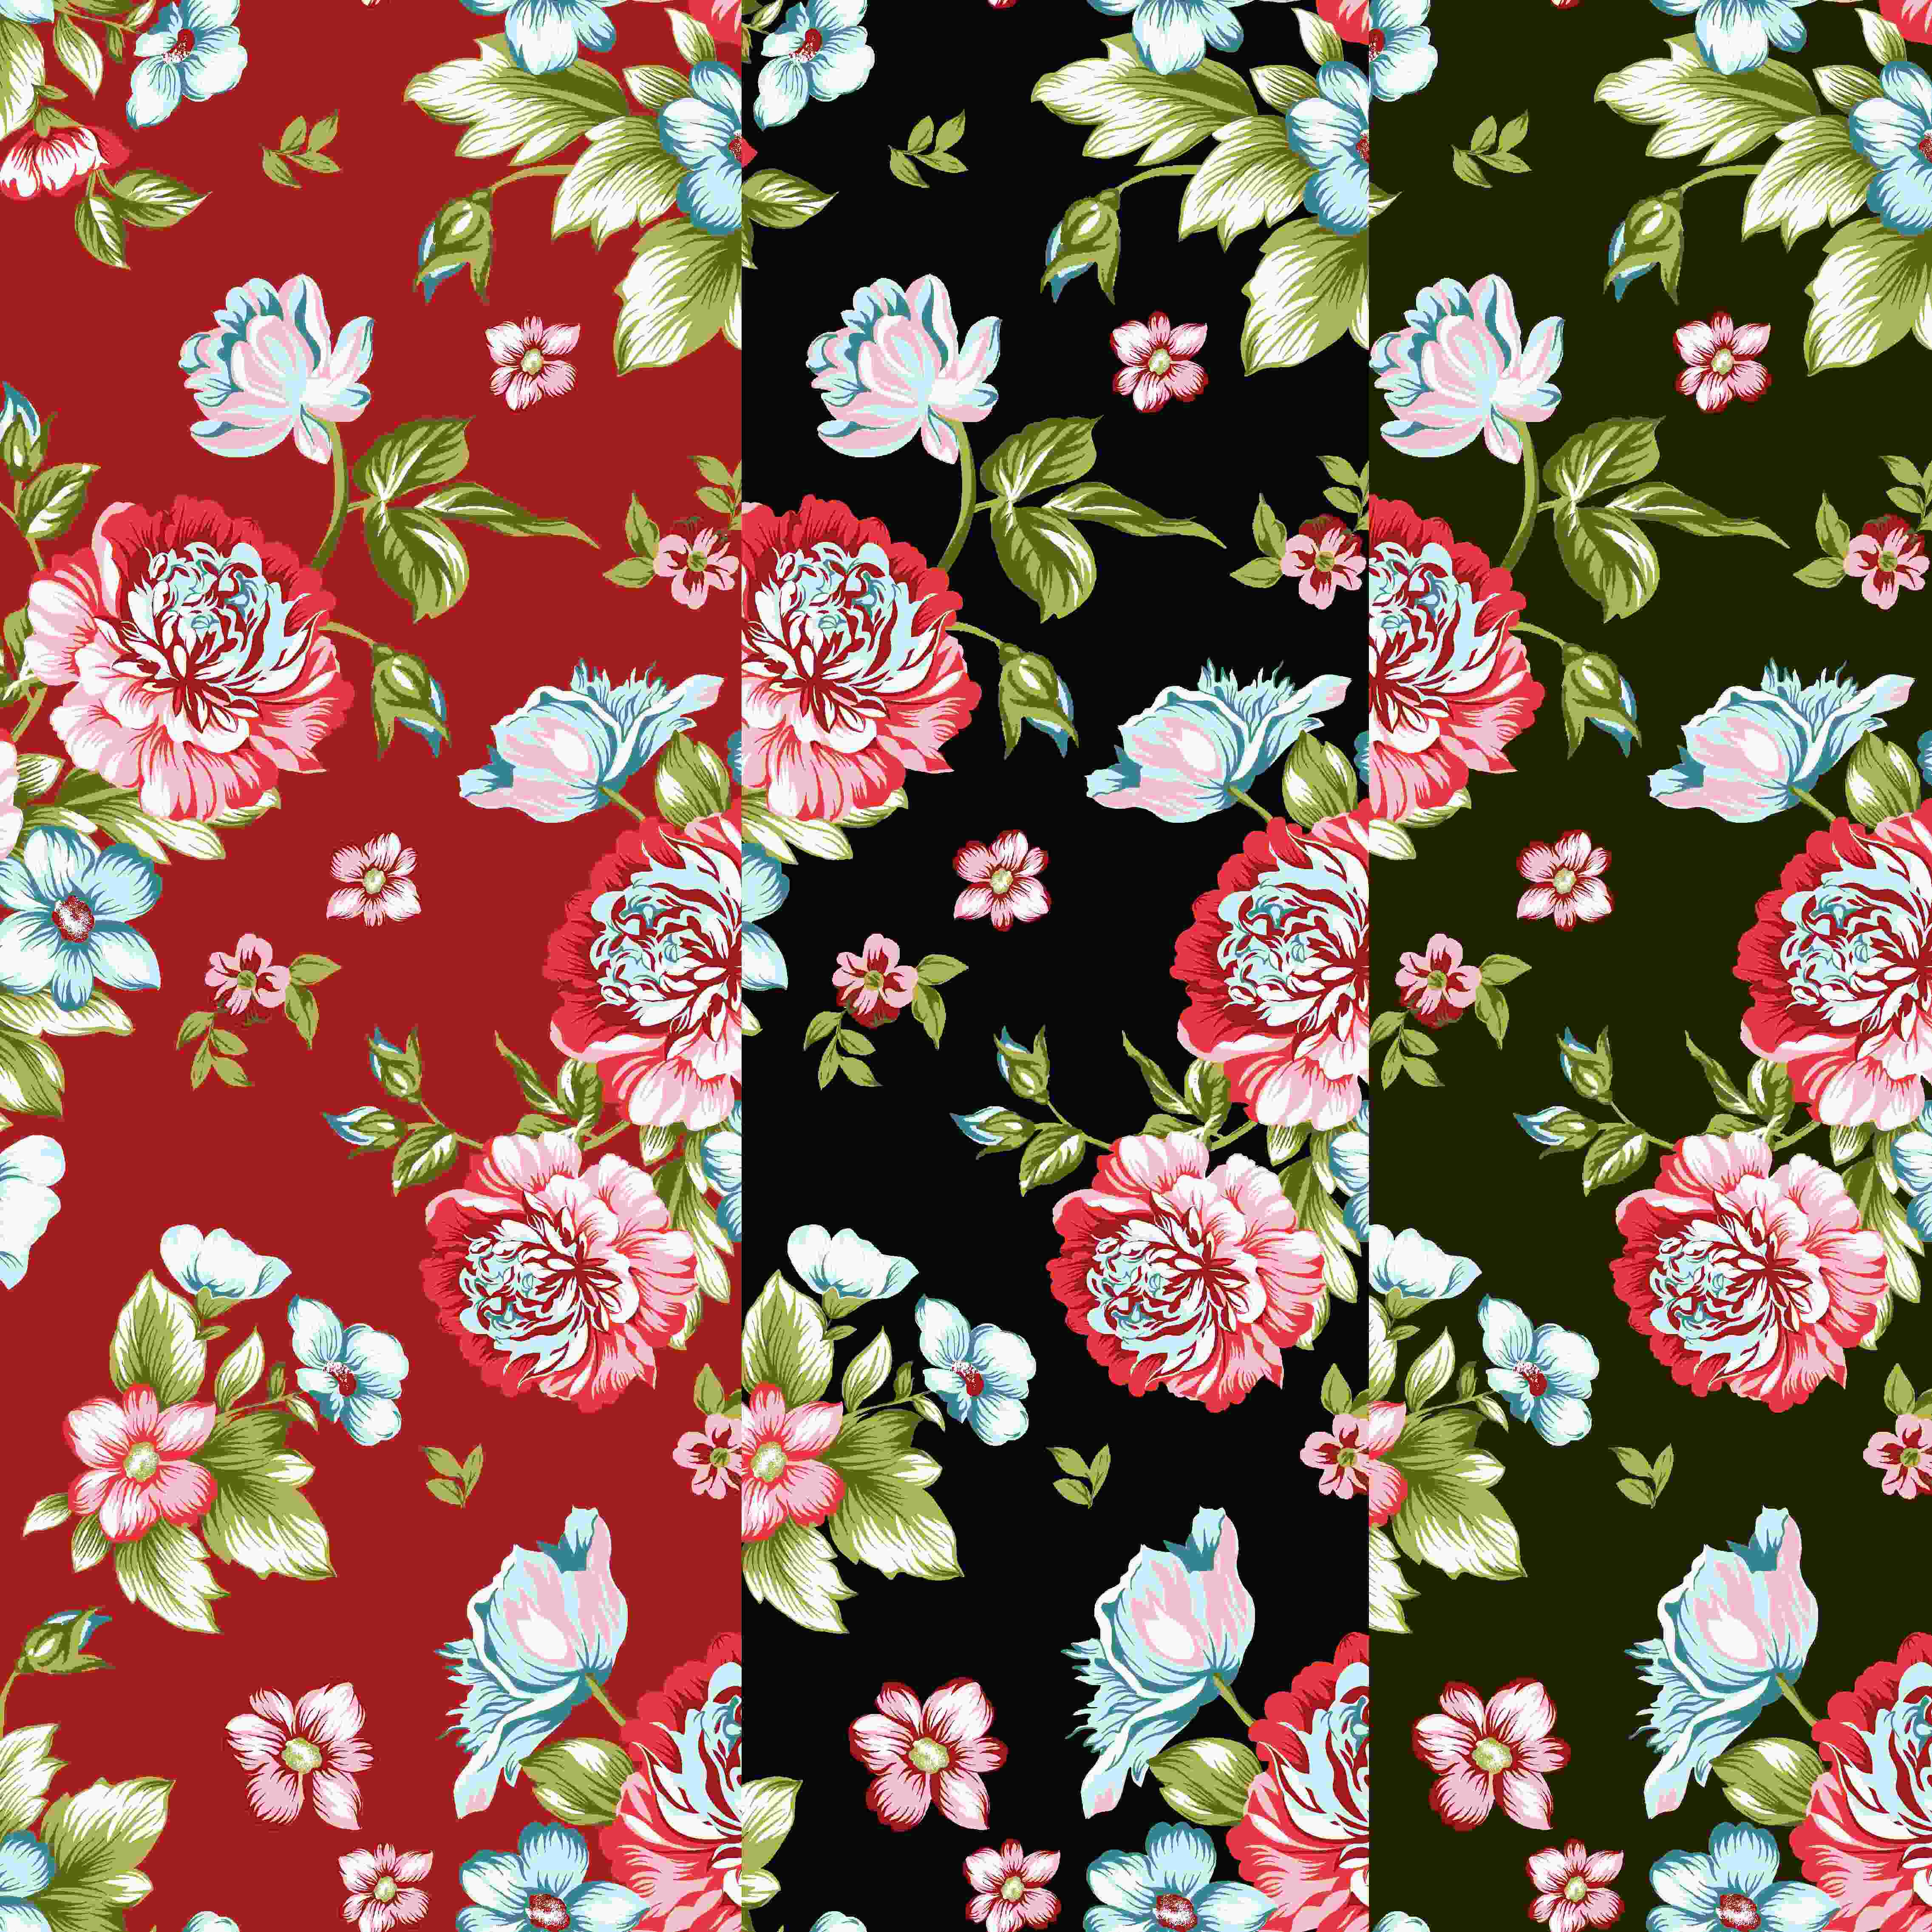 Evolution of Floral Prints preview image.